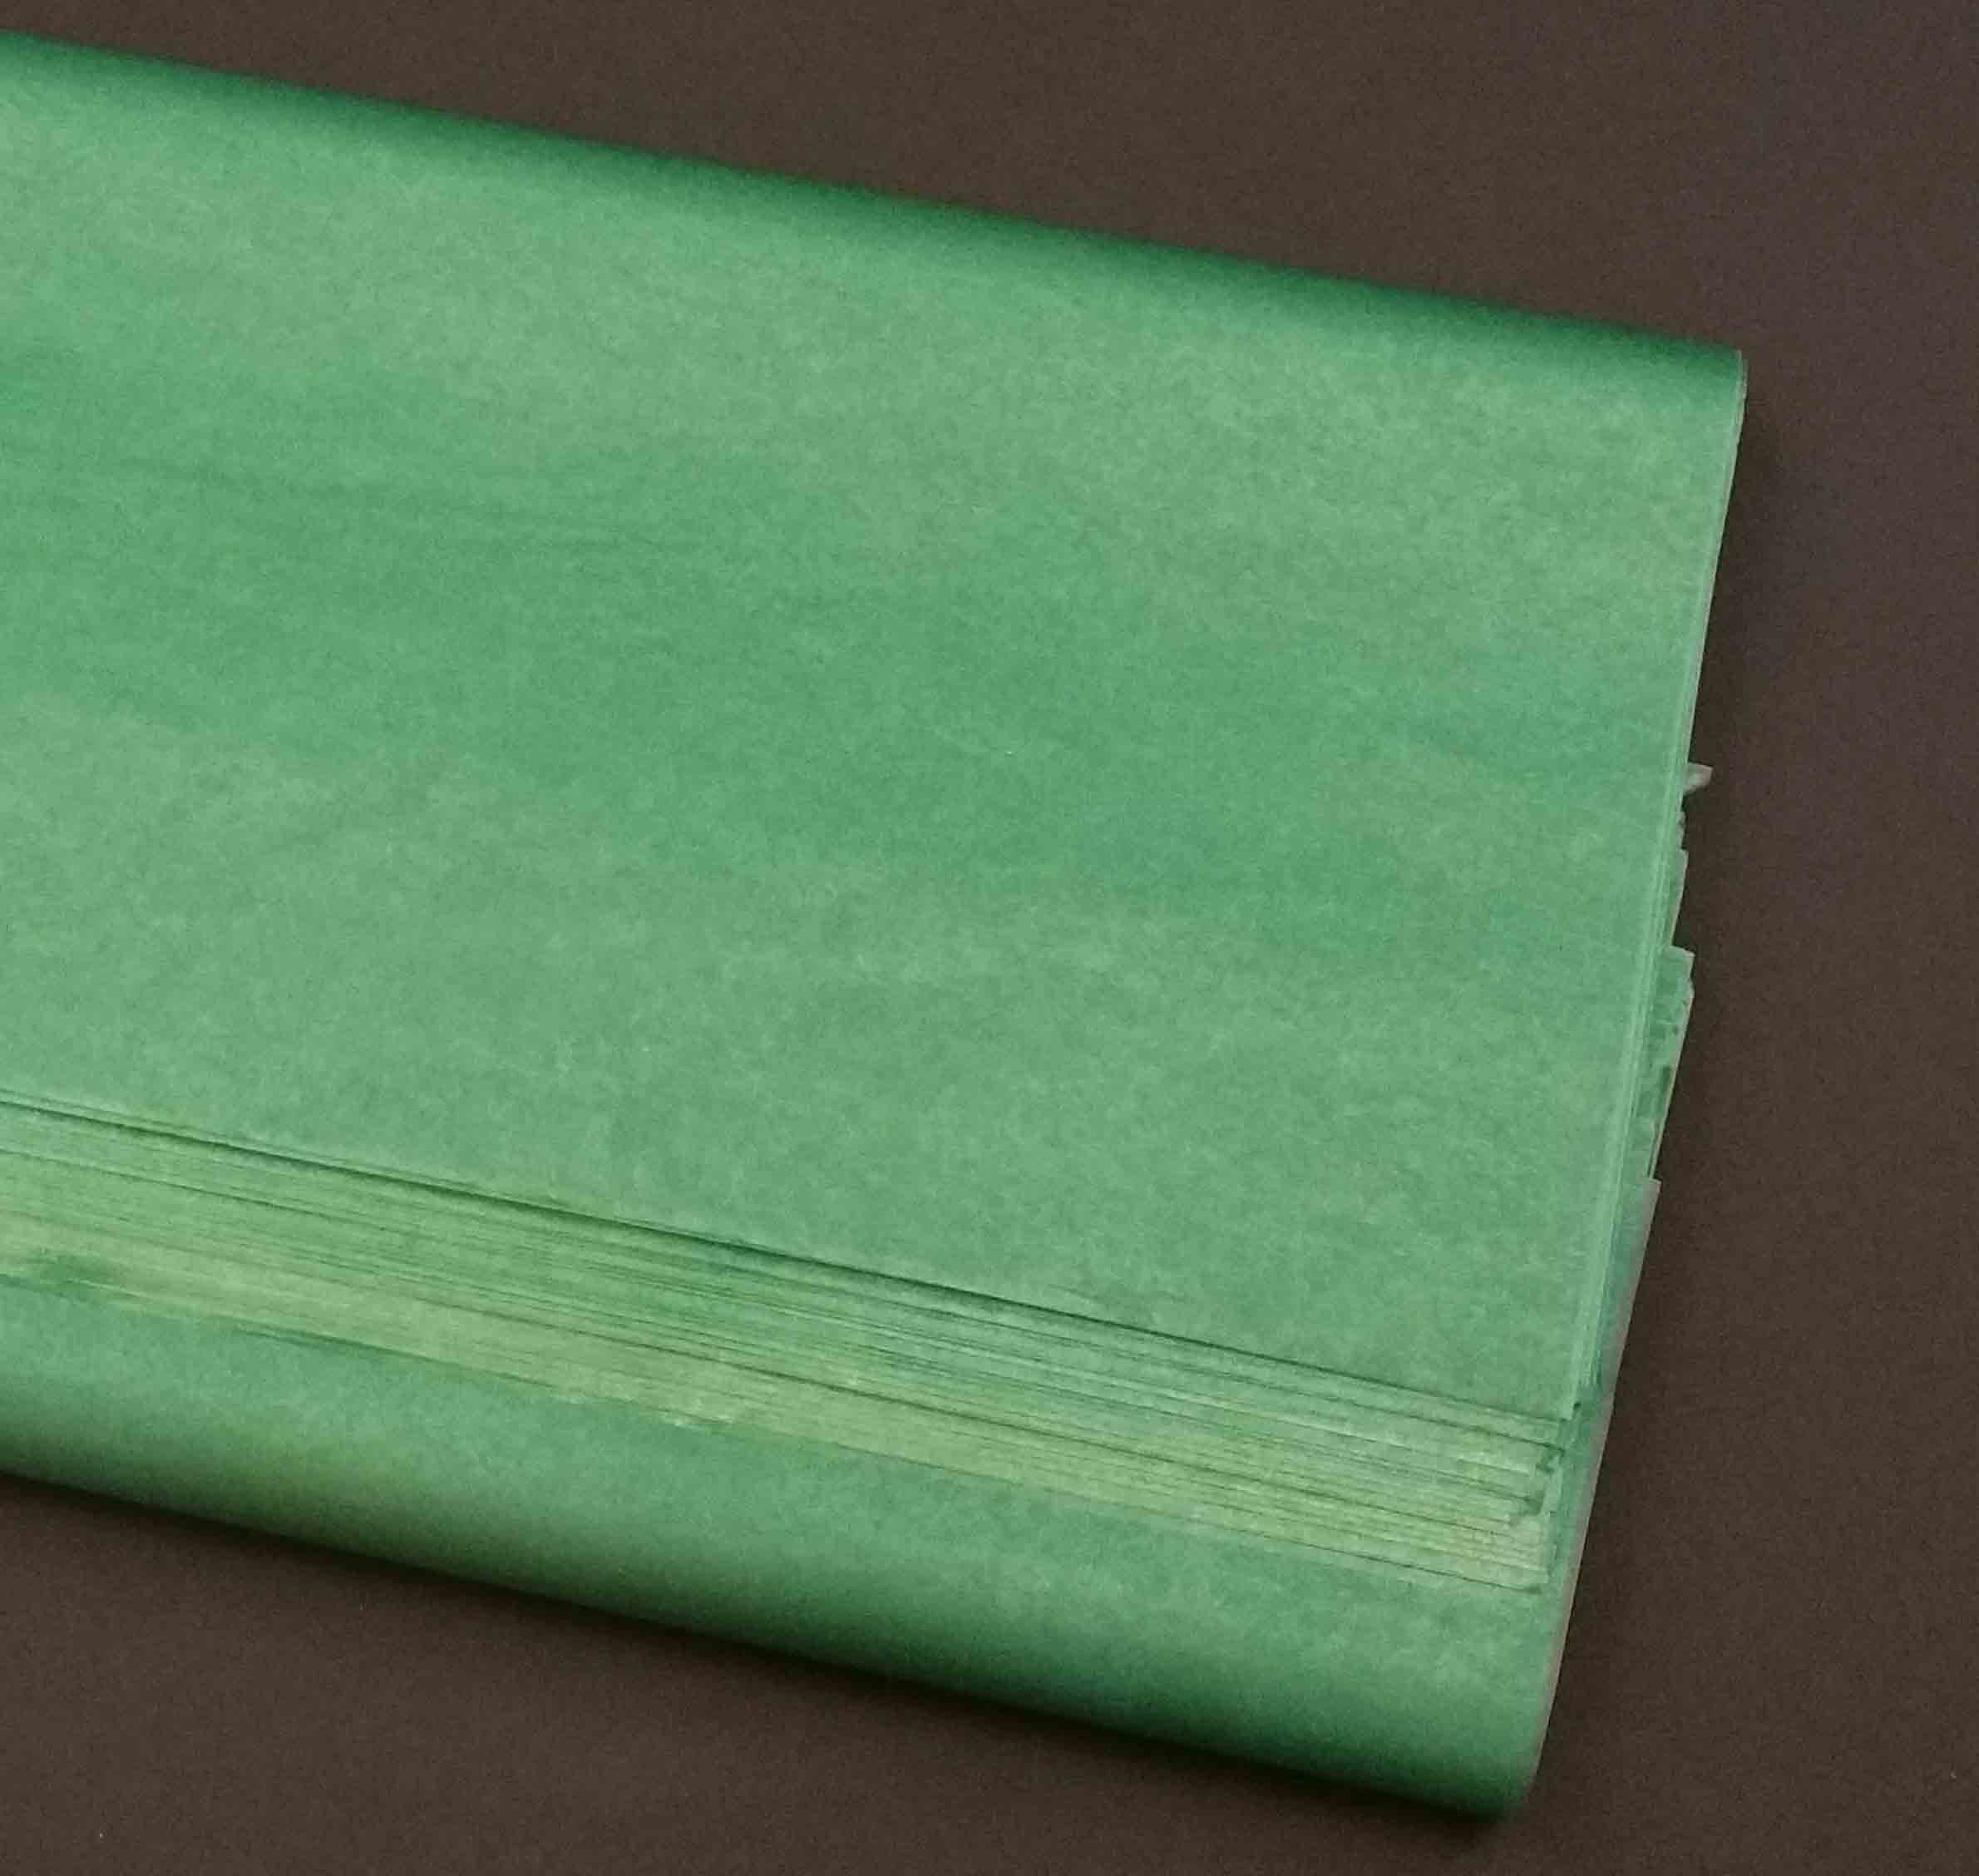 838 - 24 x 36" Waxed Tissue - 73.50 Ream, 73.10/5